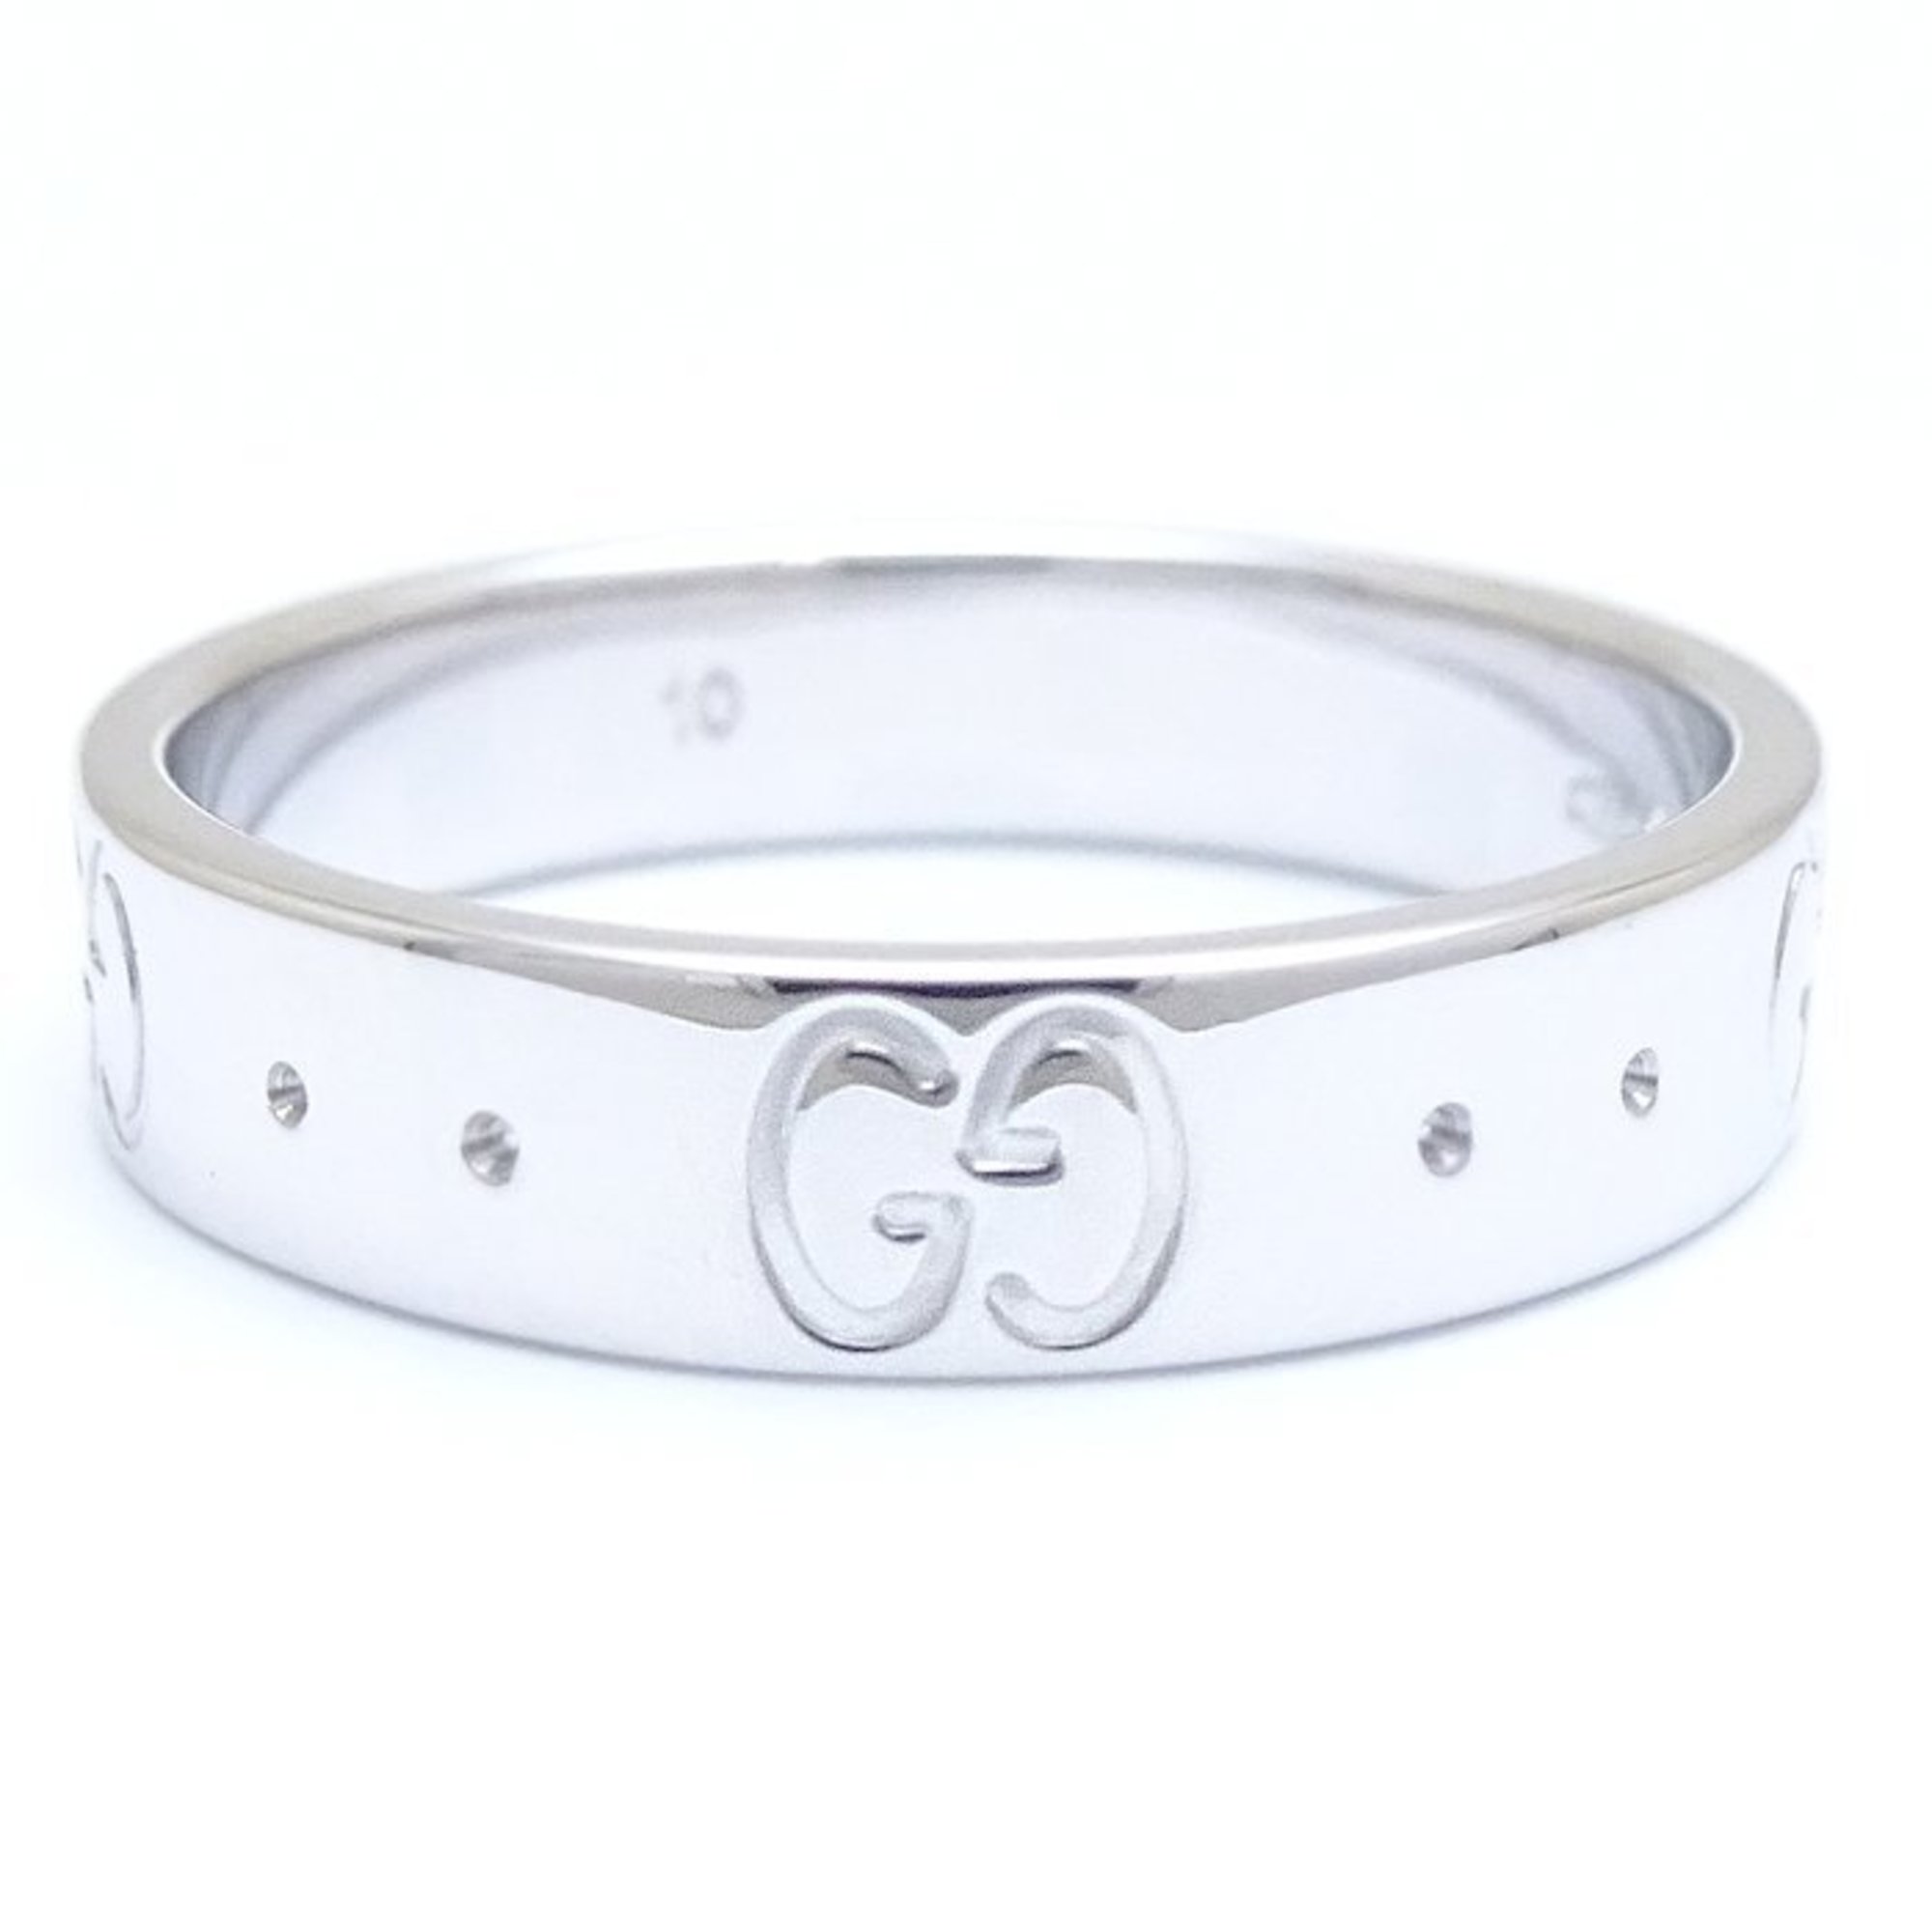 GUCCI Gucci Icon Ring #10 K18WG White Gold 291068